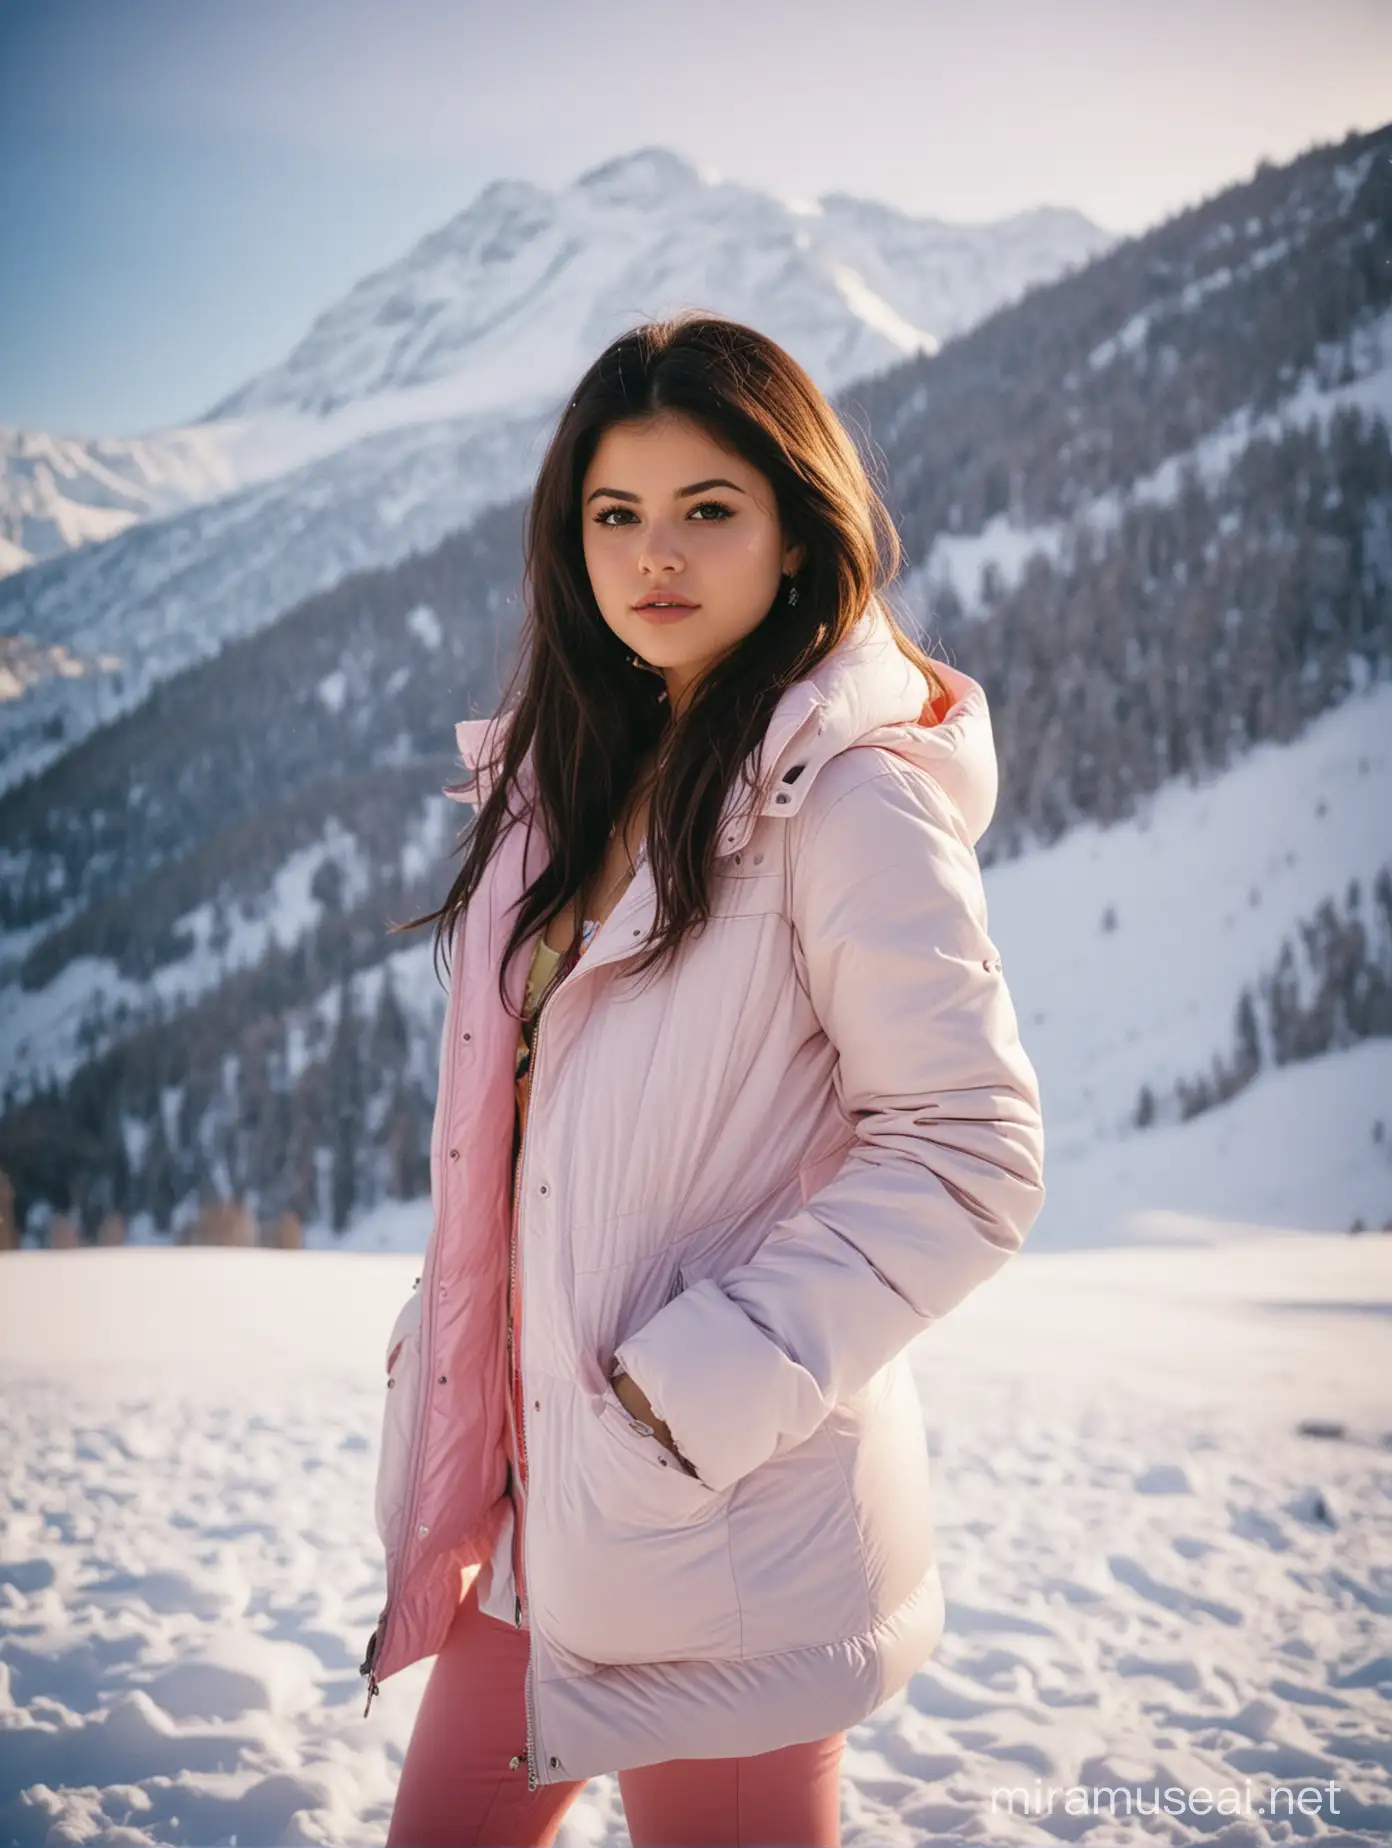 Selena Gomez Poses Amid Snowy Mountains with Leica Summicron 35mm f20 Lens on Kodak Portra 400 Film